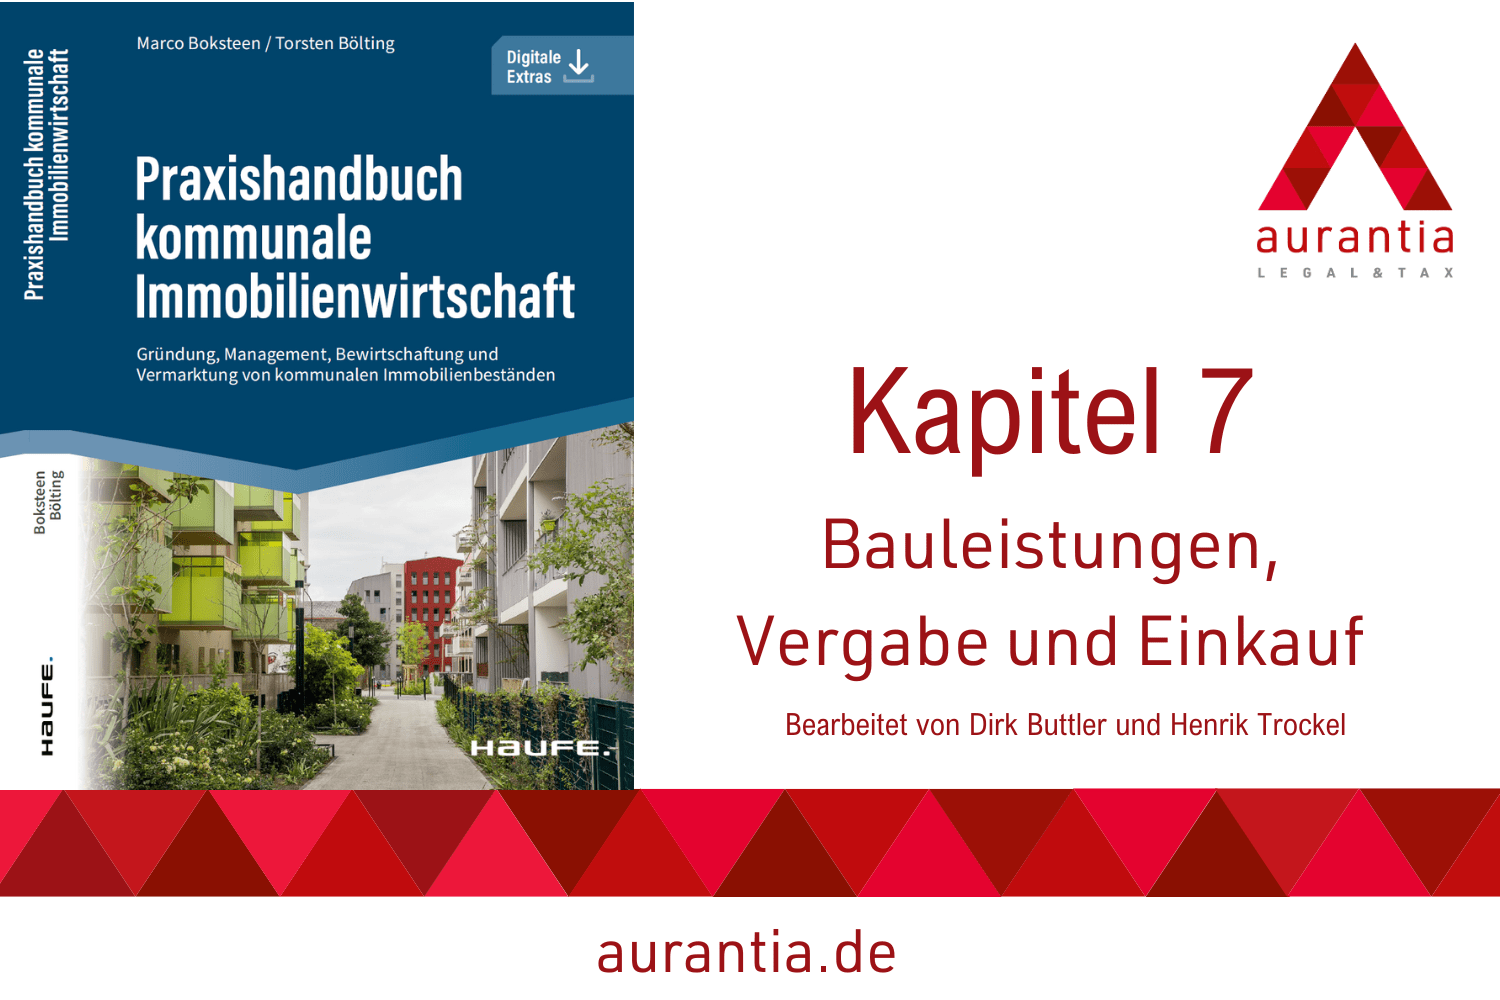 Praxishandbuch kommunale Immobilienwirtschaft aurantia.de/blog